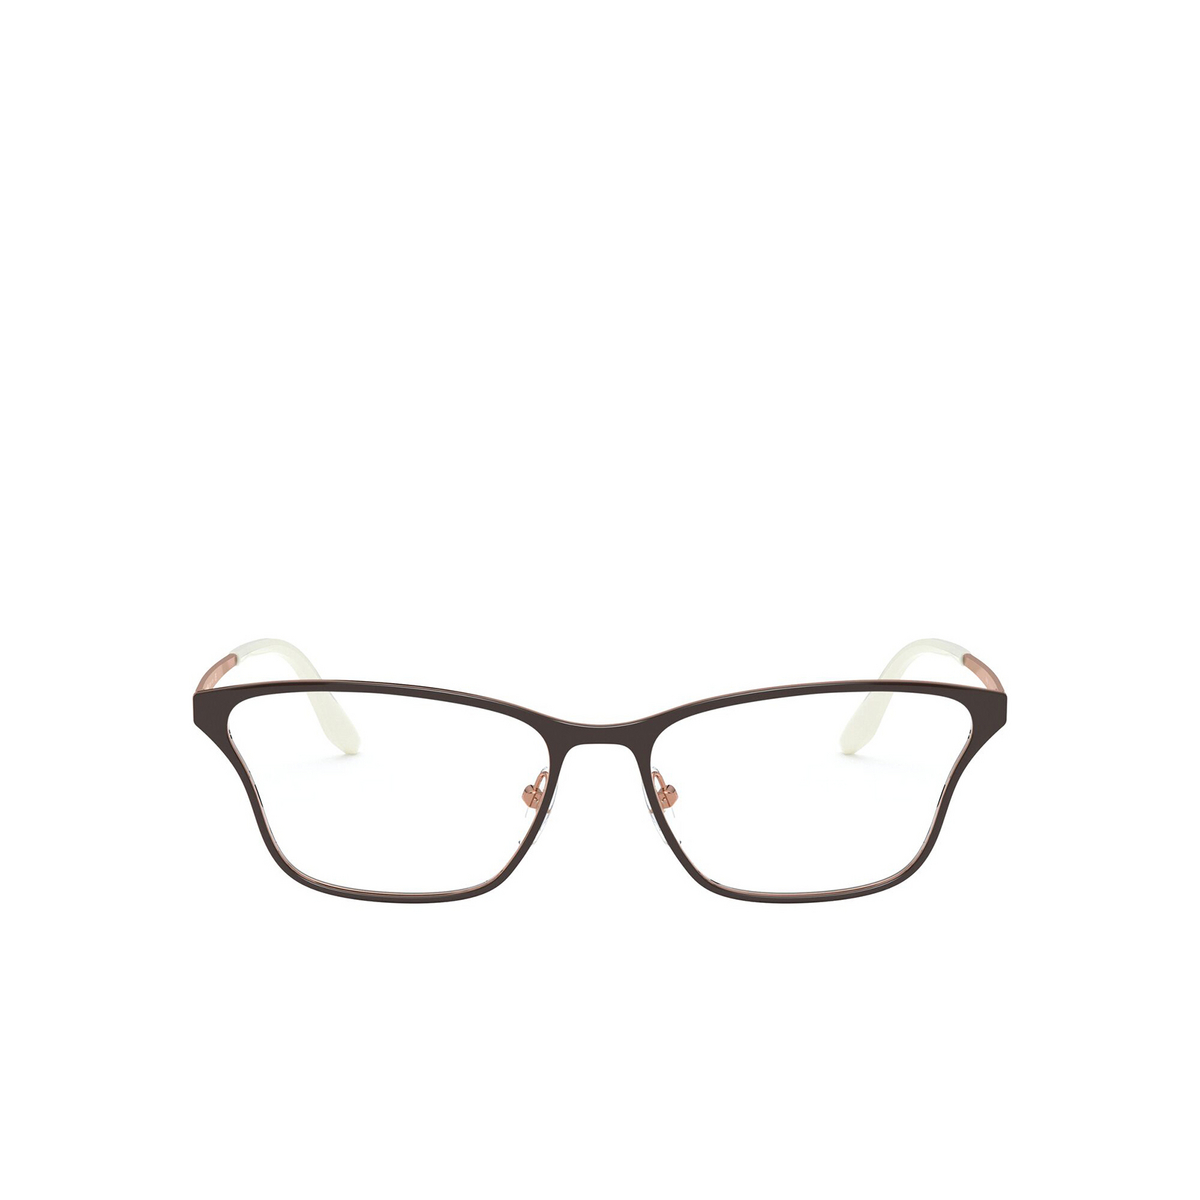 Prada® Butterfly Eyeglasses: PR 60XV color Top Brown / Rose Gold 3311O1 - 1/3.